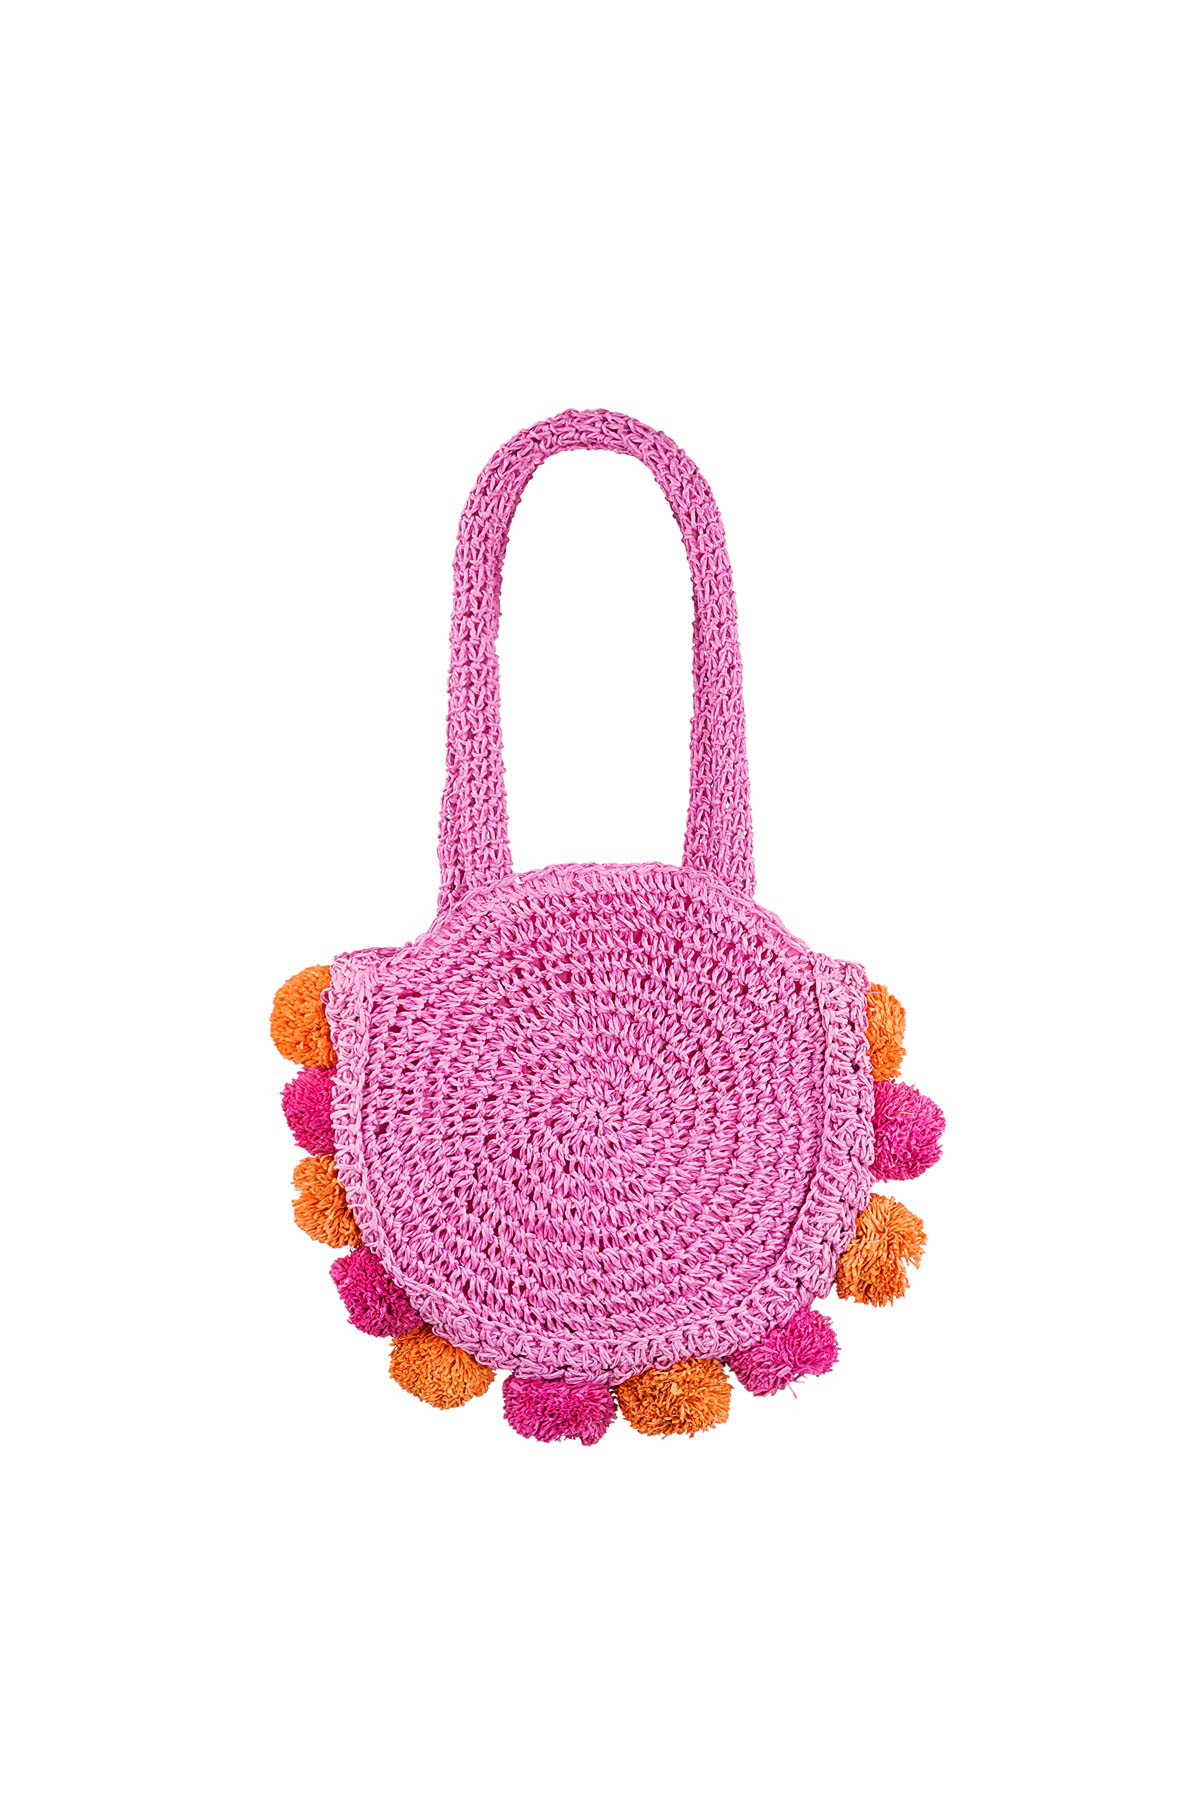 Pom pom beach bag - orange pink